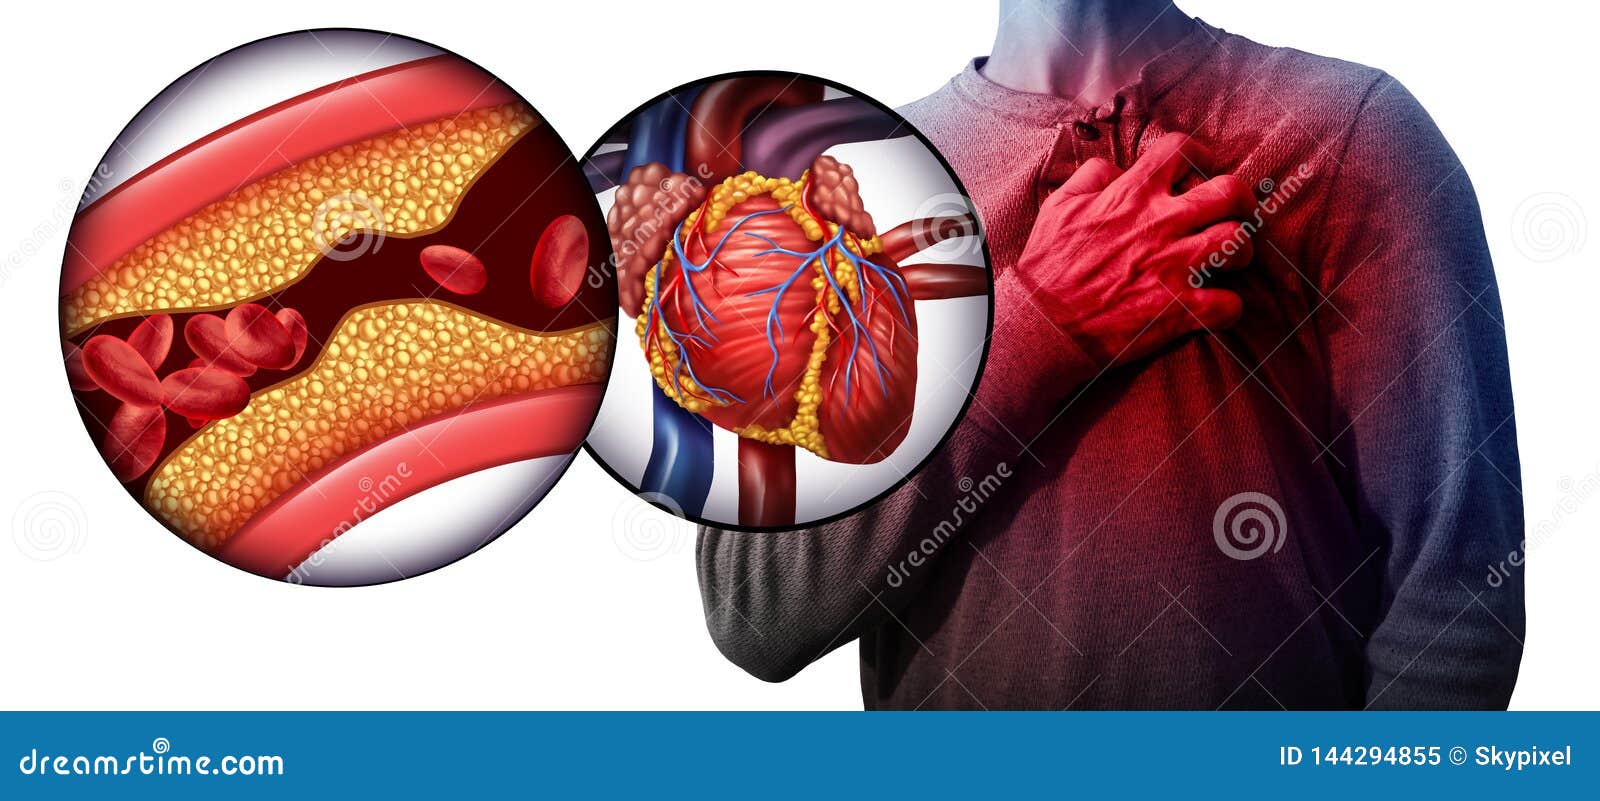 myocardial infarction human heart disease